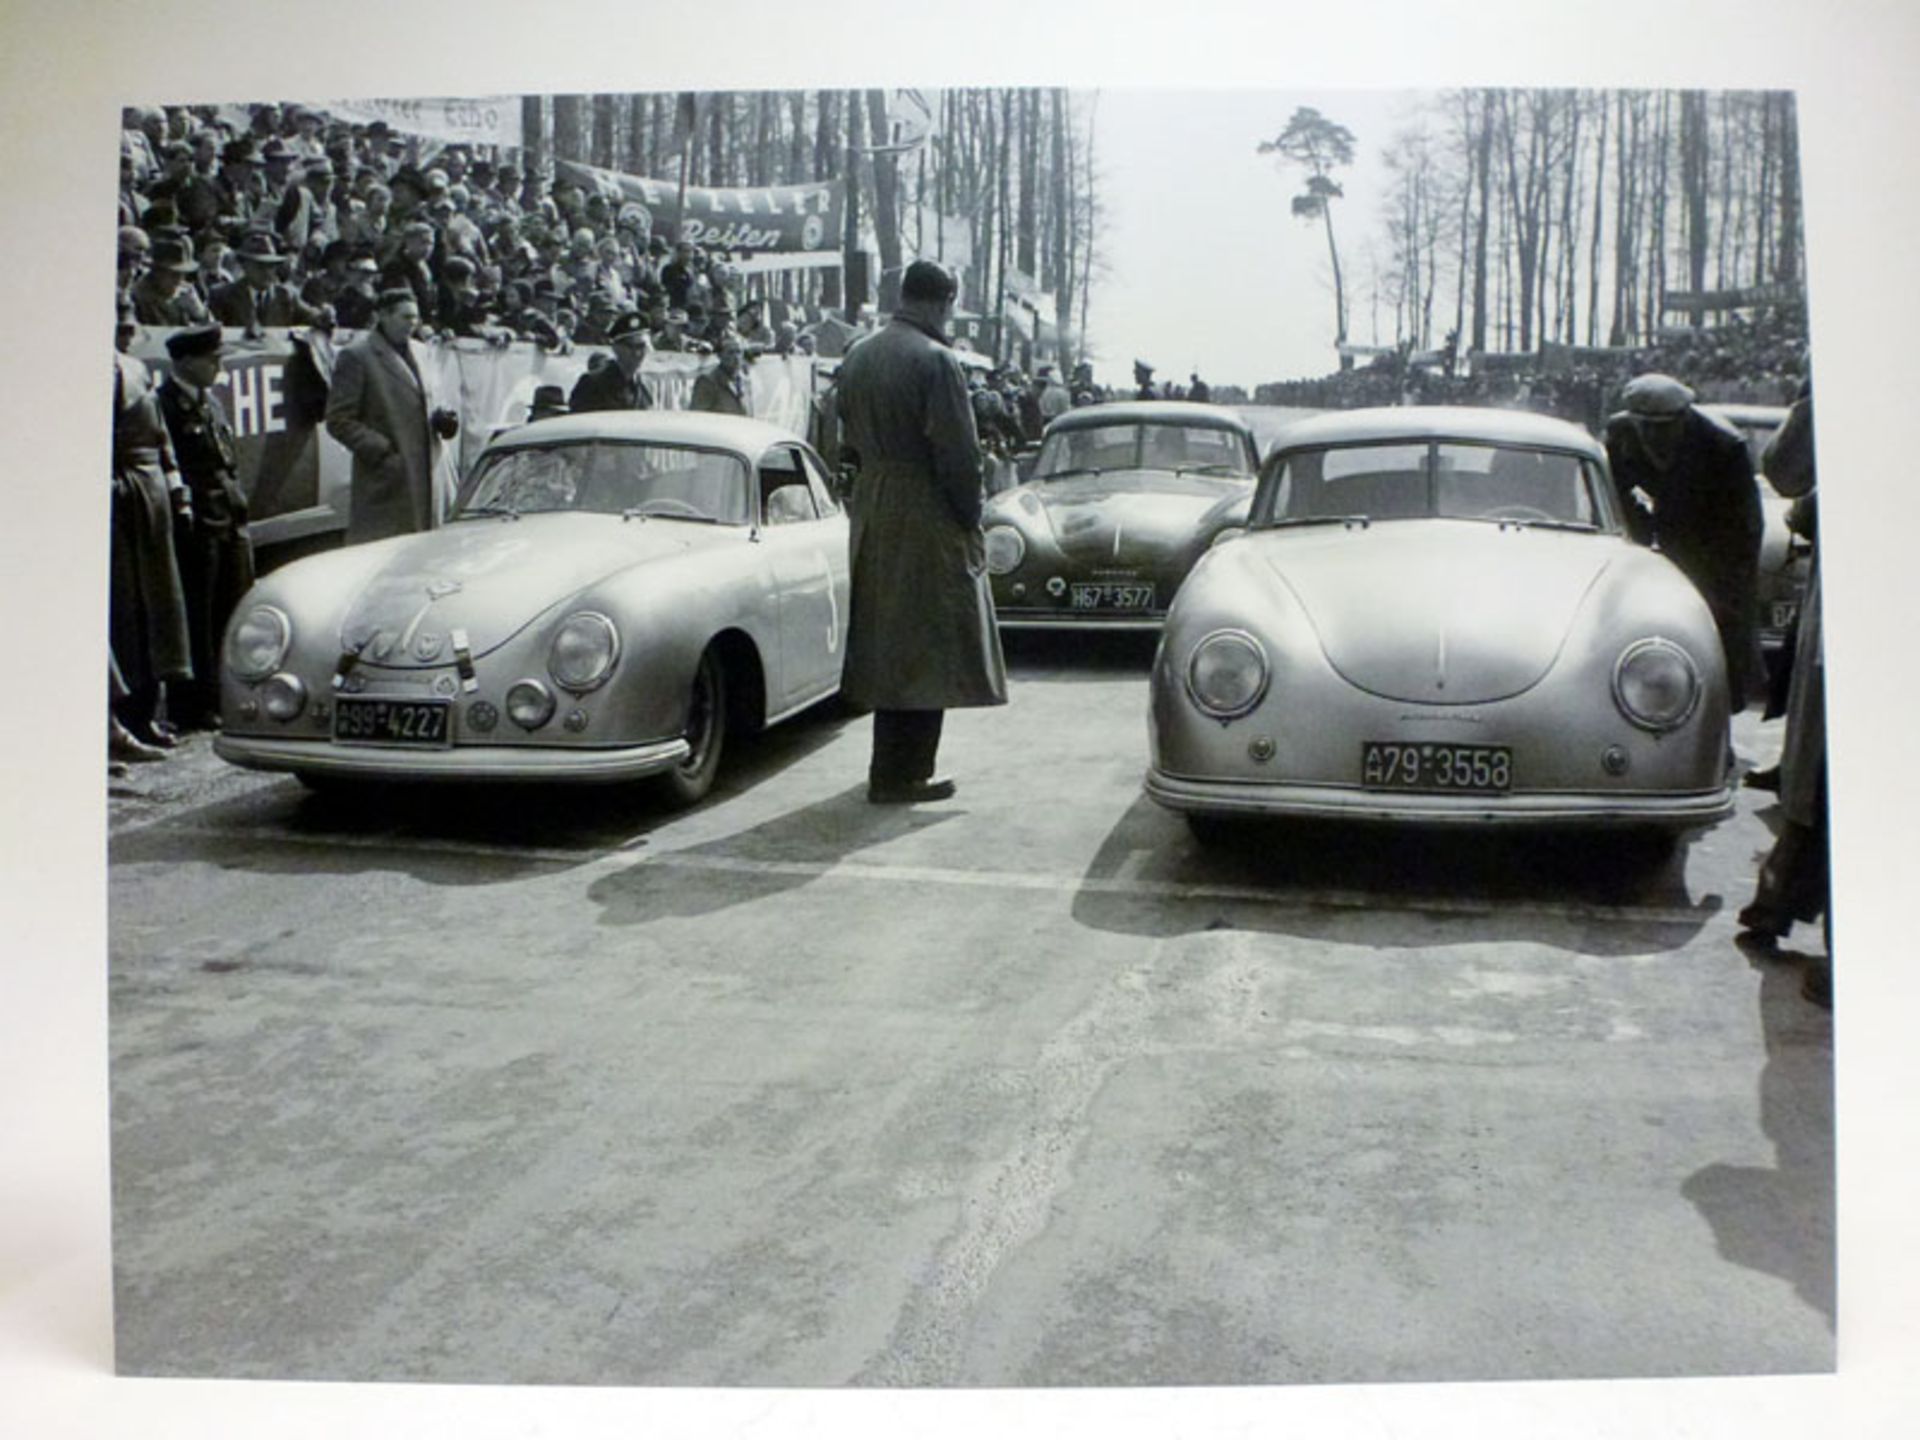 Two Porsche 356 Artworks